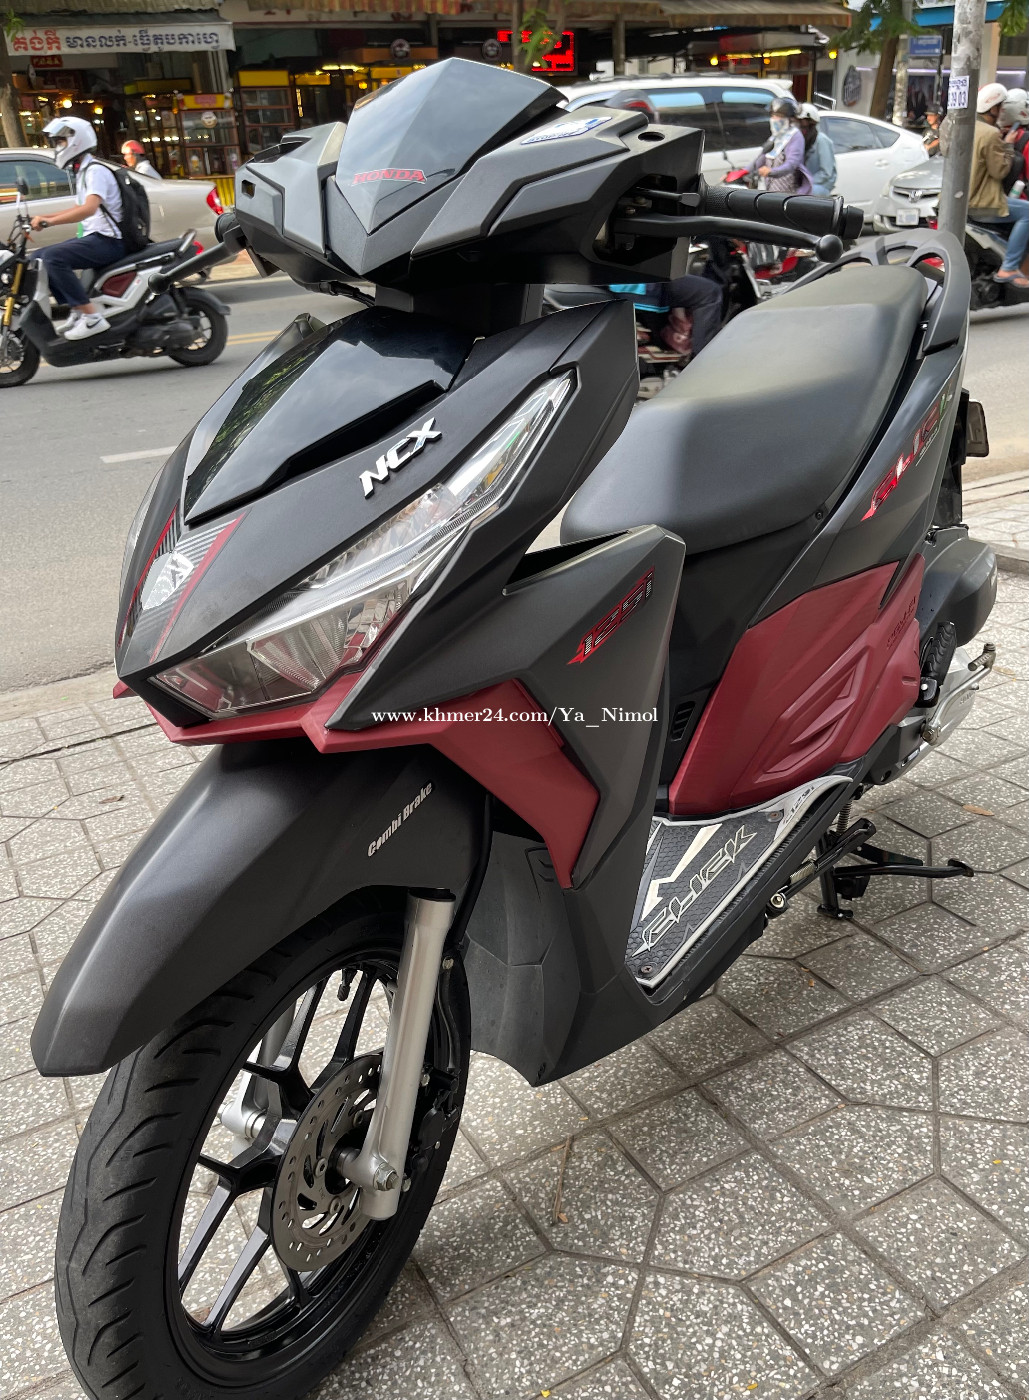 Honda Click 2017 ករមហន Price 1580 in Phnom Penh Cambodia  យ នមល  ទញលកមត Sathya  Khmer24com